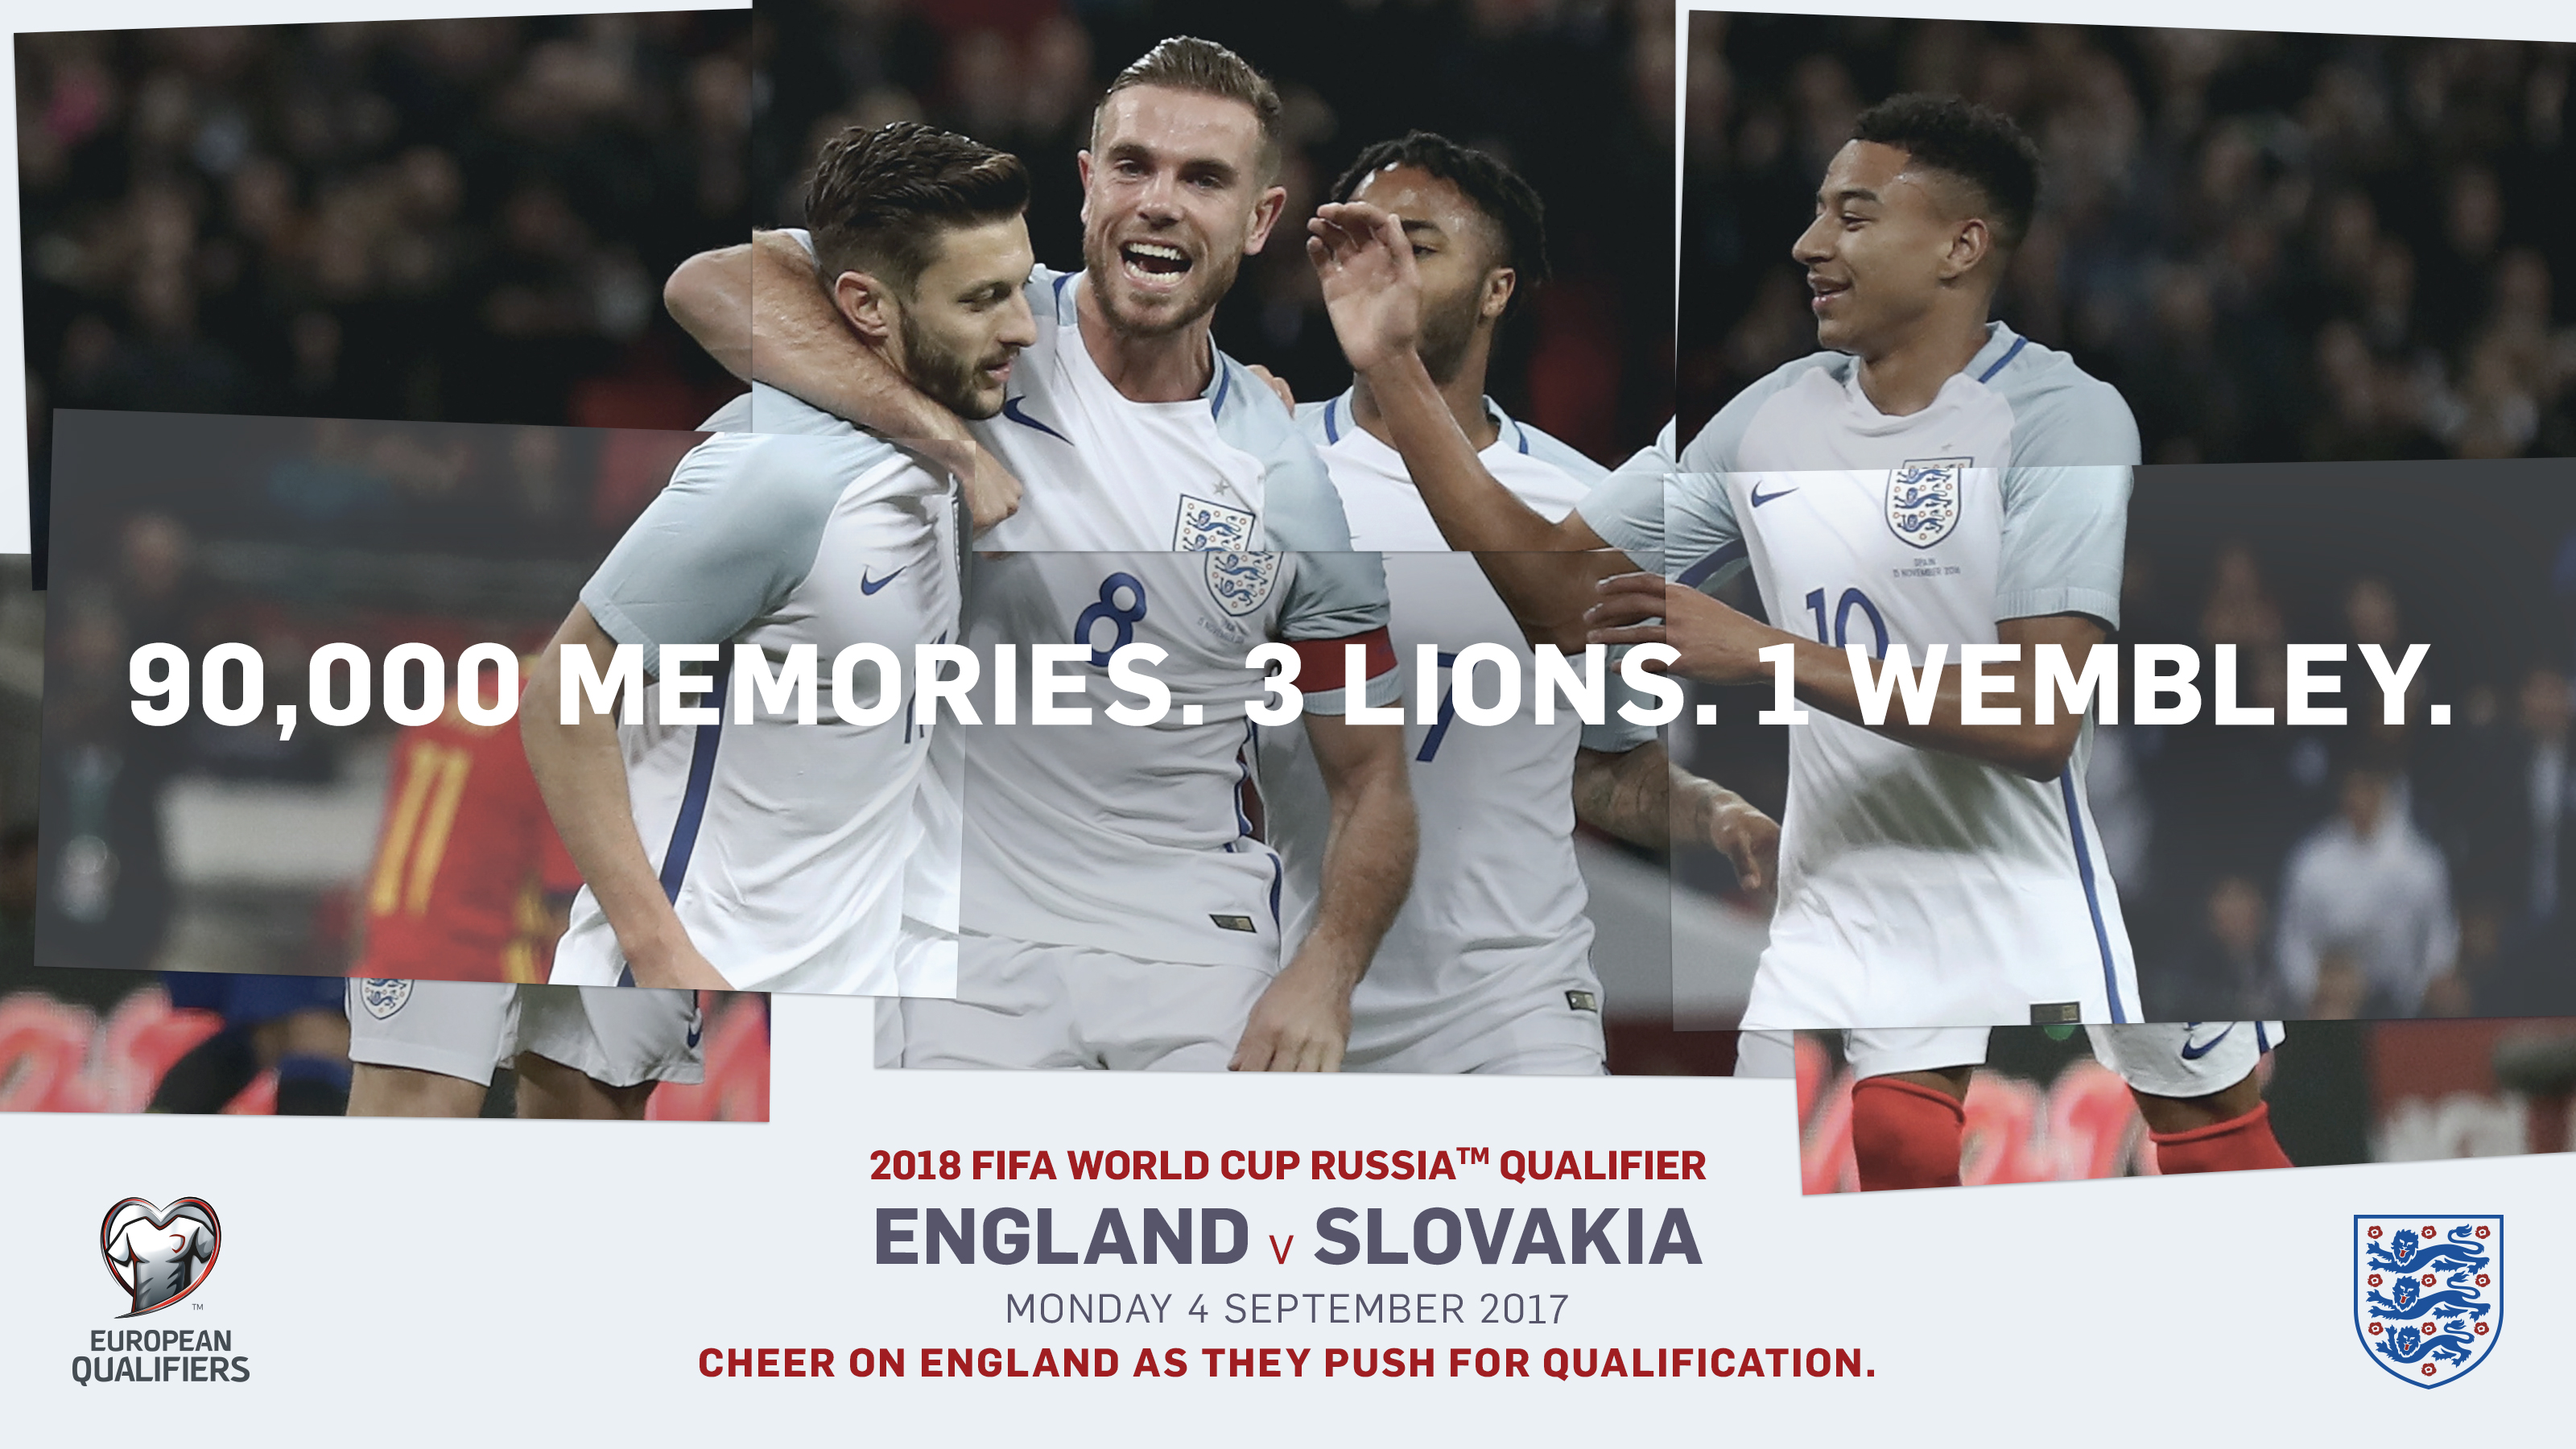 England v Slovakia tickets available from 12pm Friday 2 June